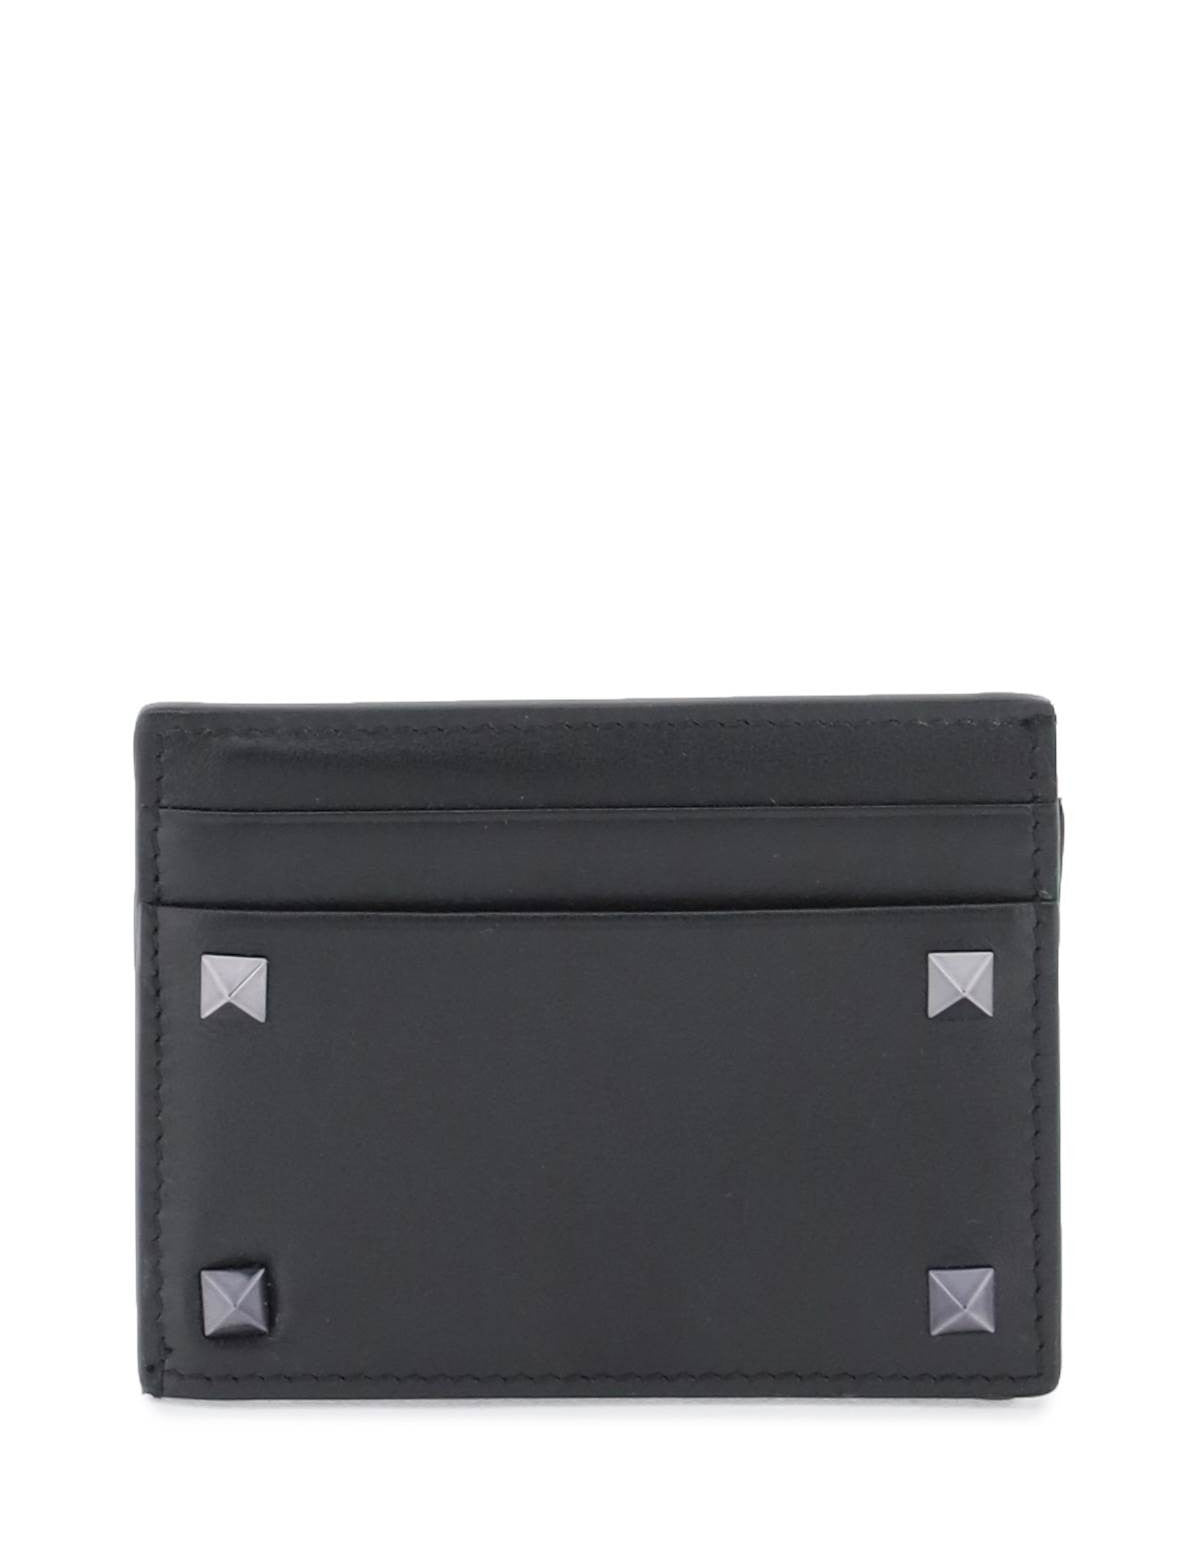 valentino-garavani-rockstud-leather-card-holder.jpg